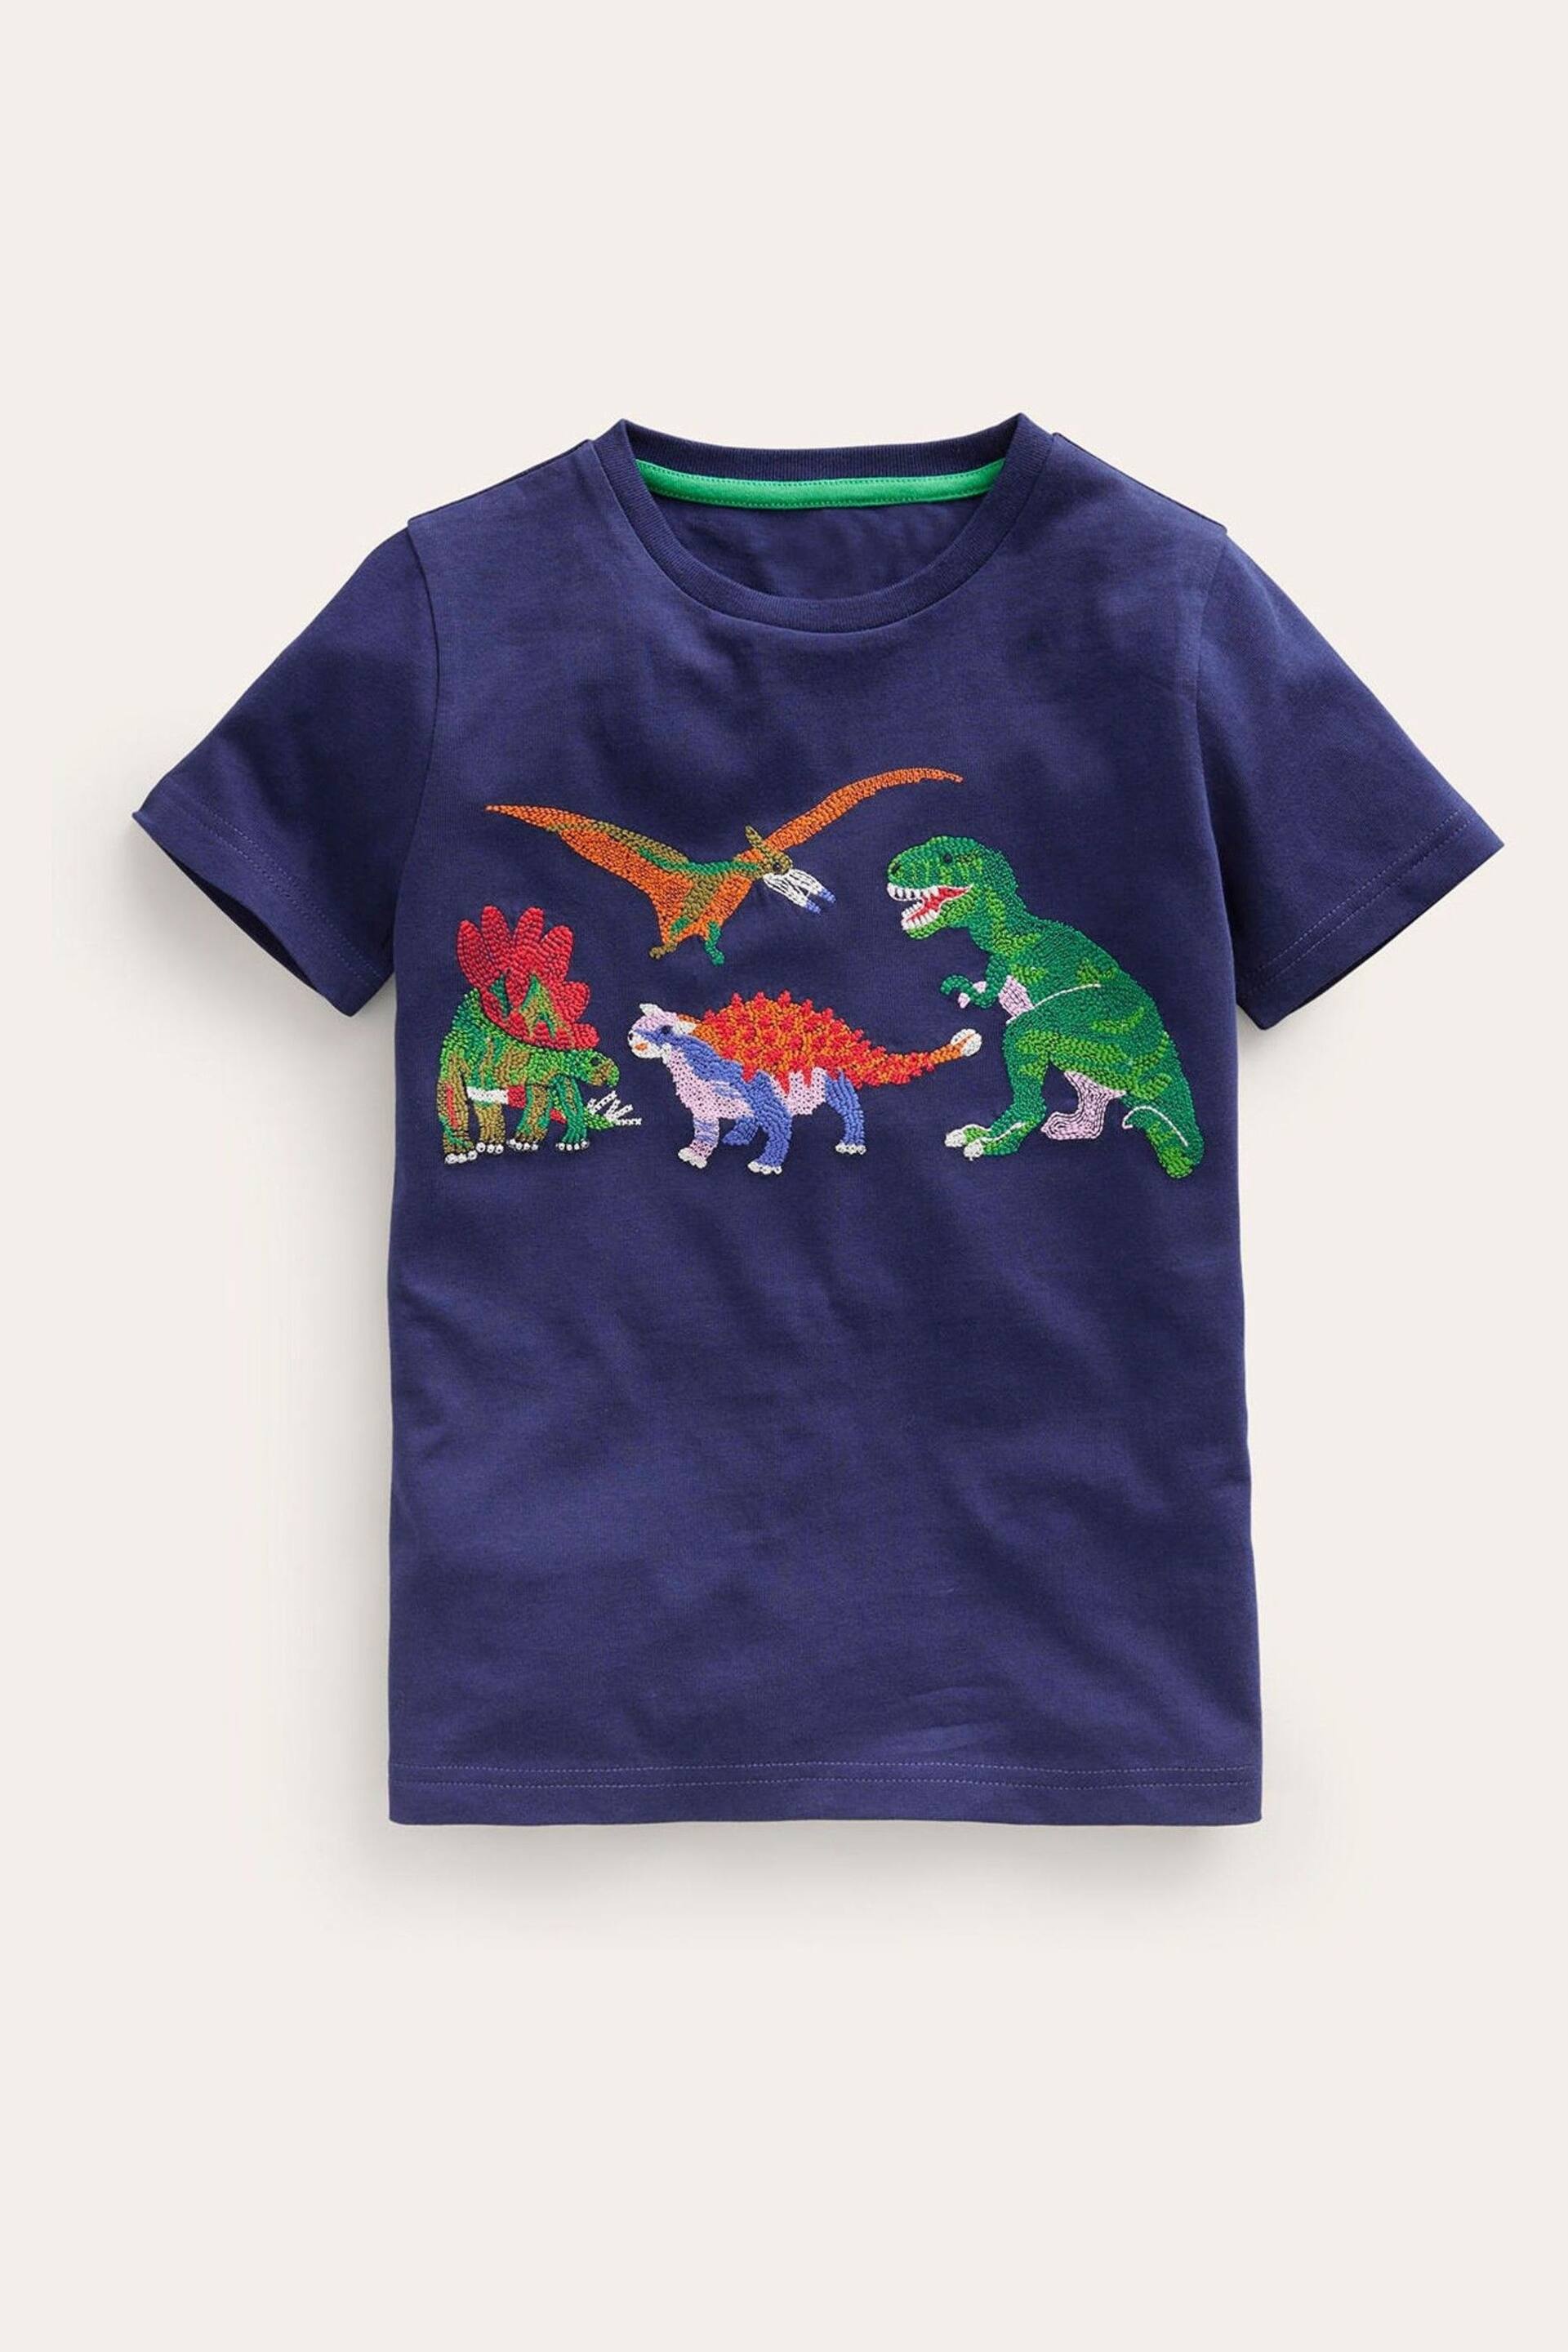 Boden Blue Small Superstitch Dinosaur T-Shirt - Image 1 of 3